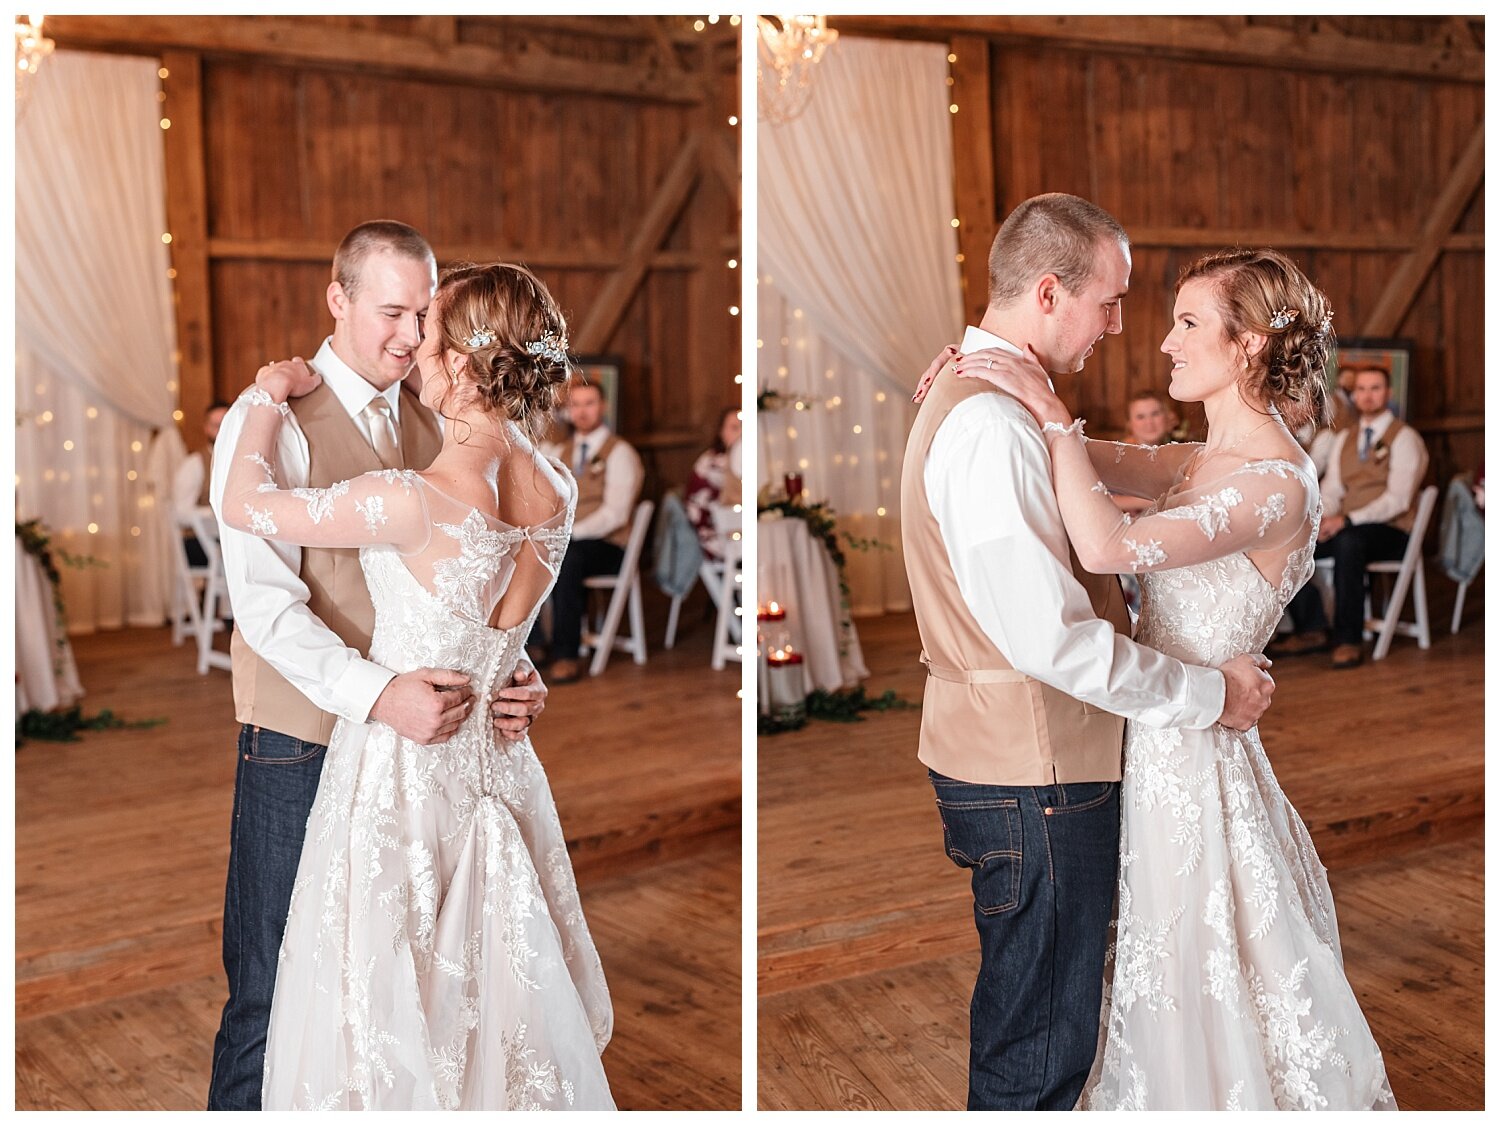 Springside Barn wedding, Lancaster Pennsylvania, pa wedding venue, barn, twinkle lights, bride and groom dance